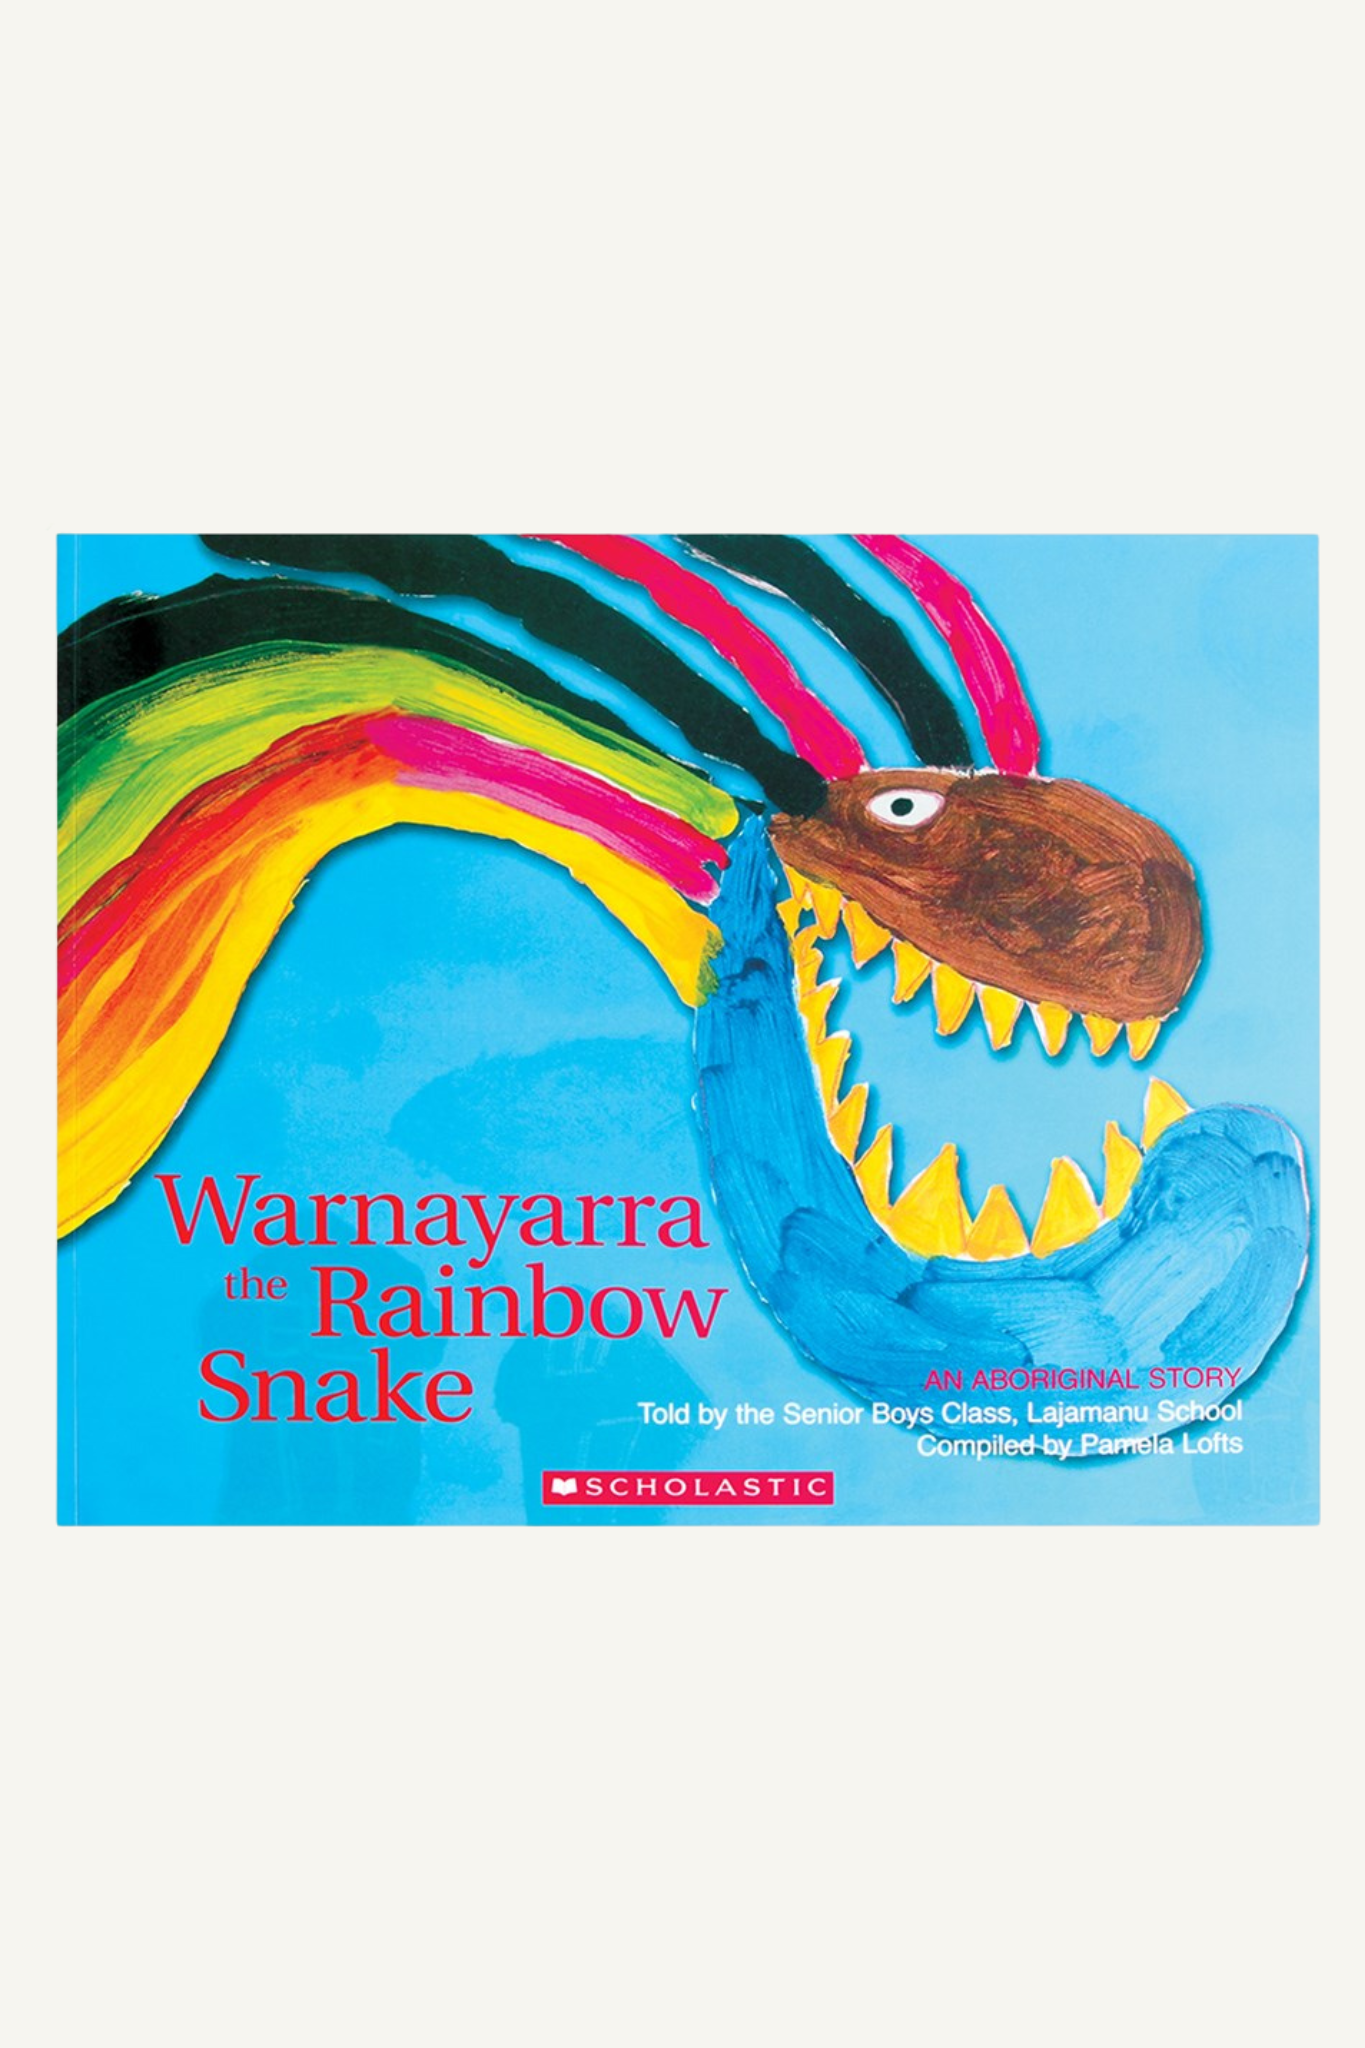 Warnayarra the Rainbow Serpent